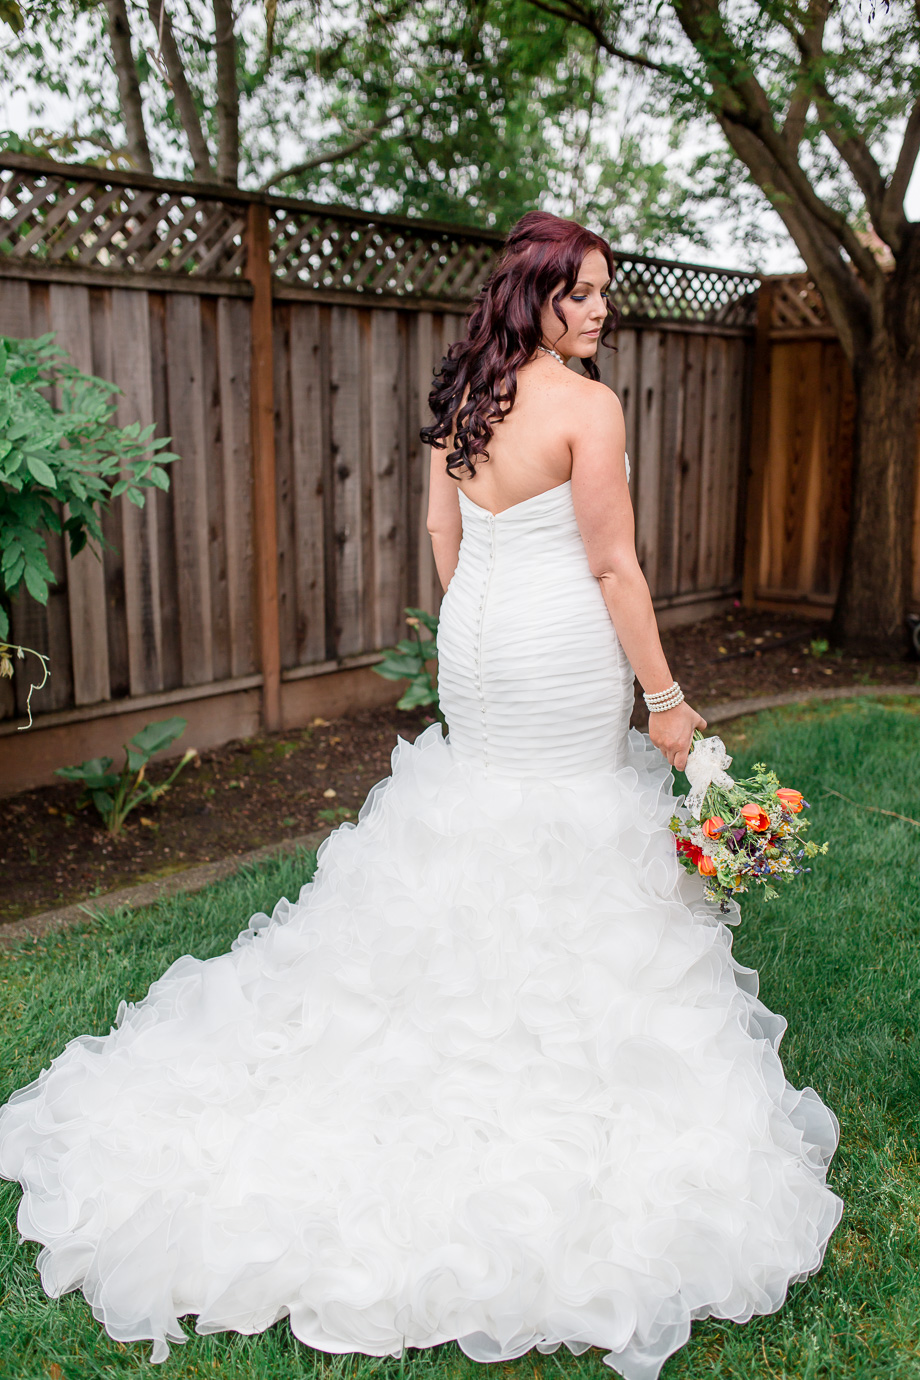 stunning bride with a beautiful ruffled wedding dress - California rainbow themed wedding